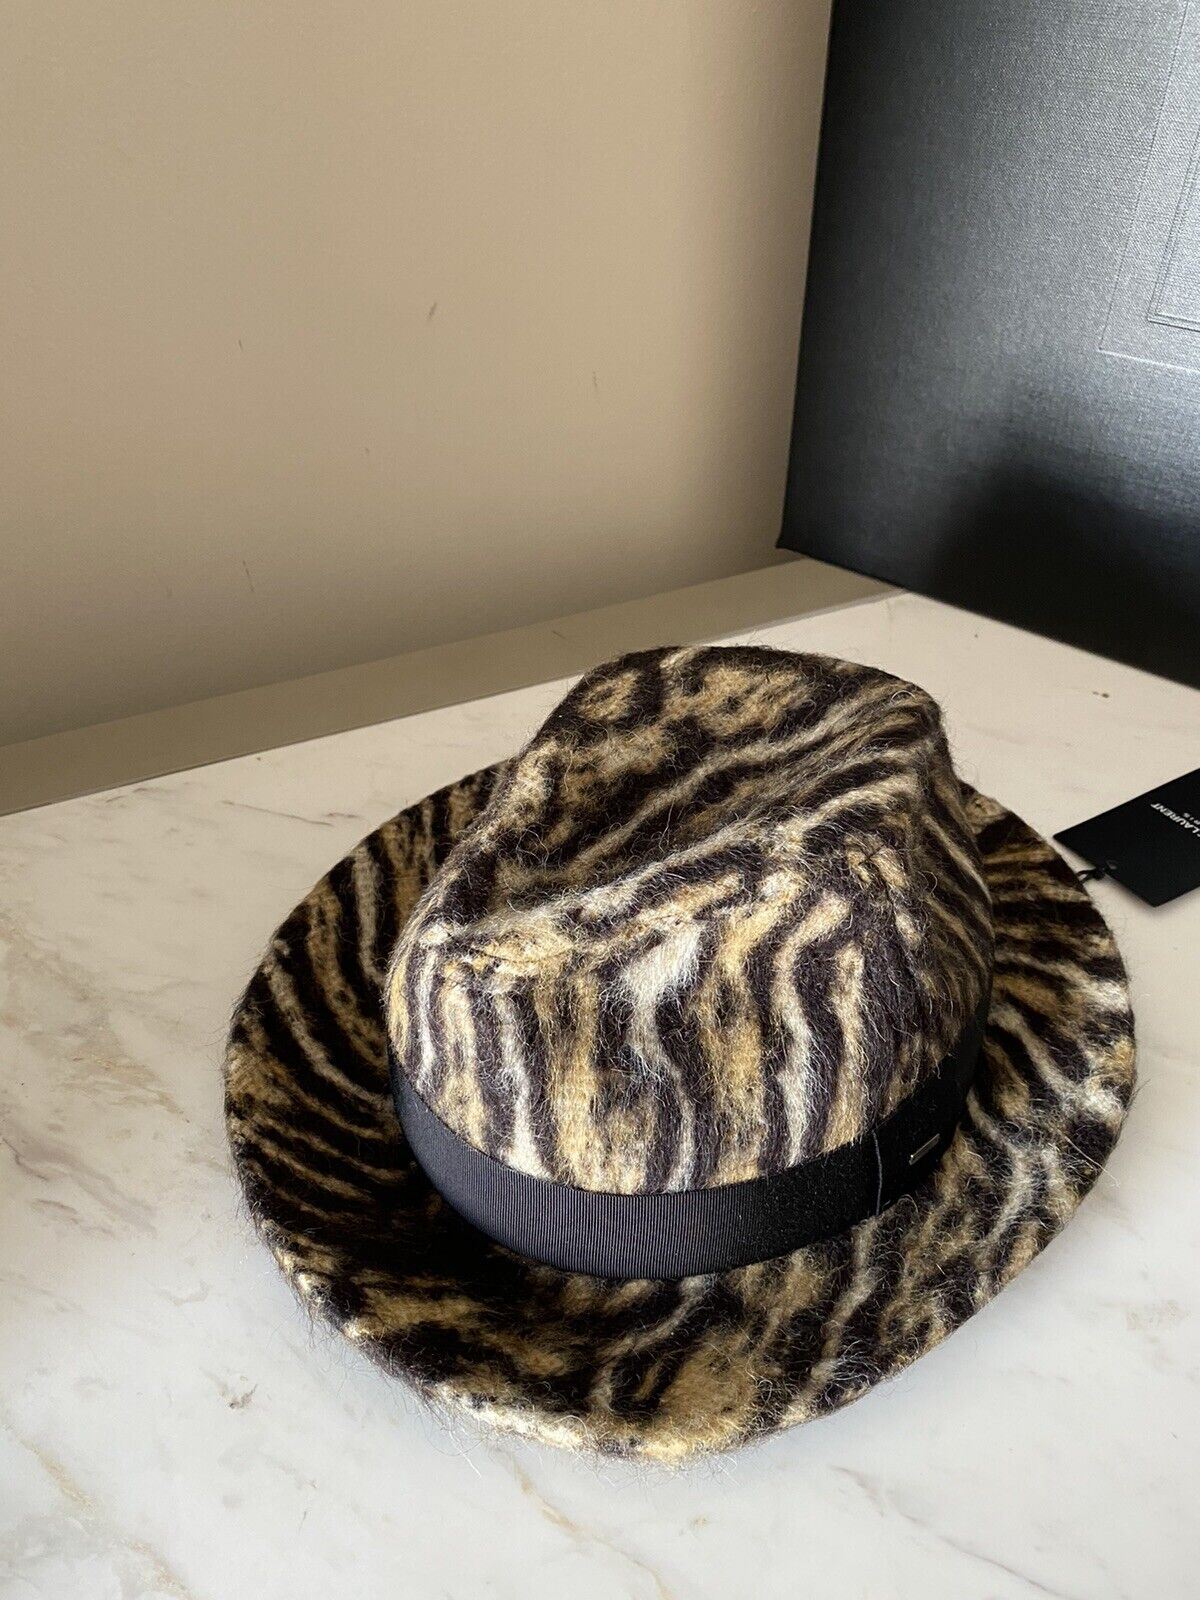 Женская шляпа-федора NWT Saint Laurent бежевого/черного цвета, размер S, Италия